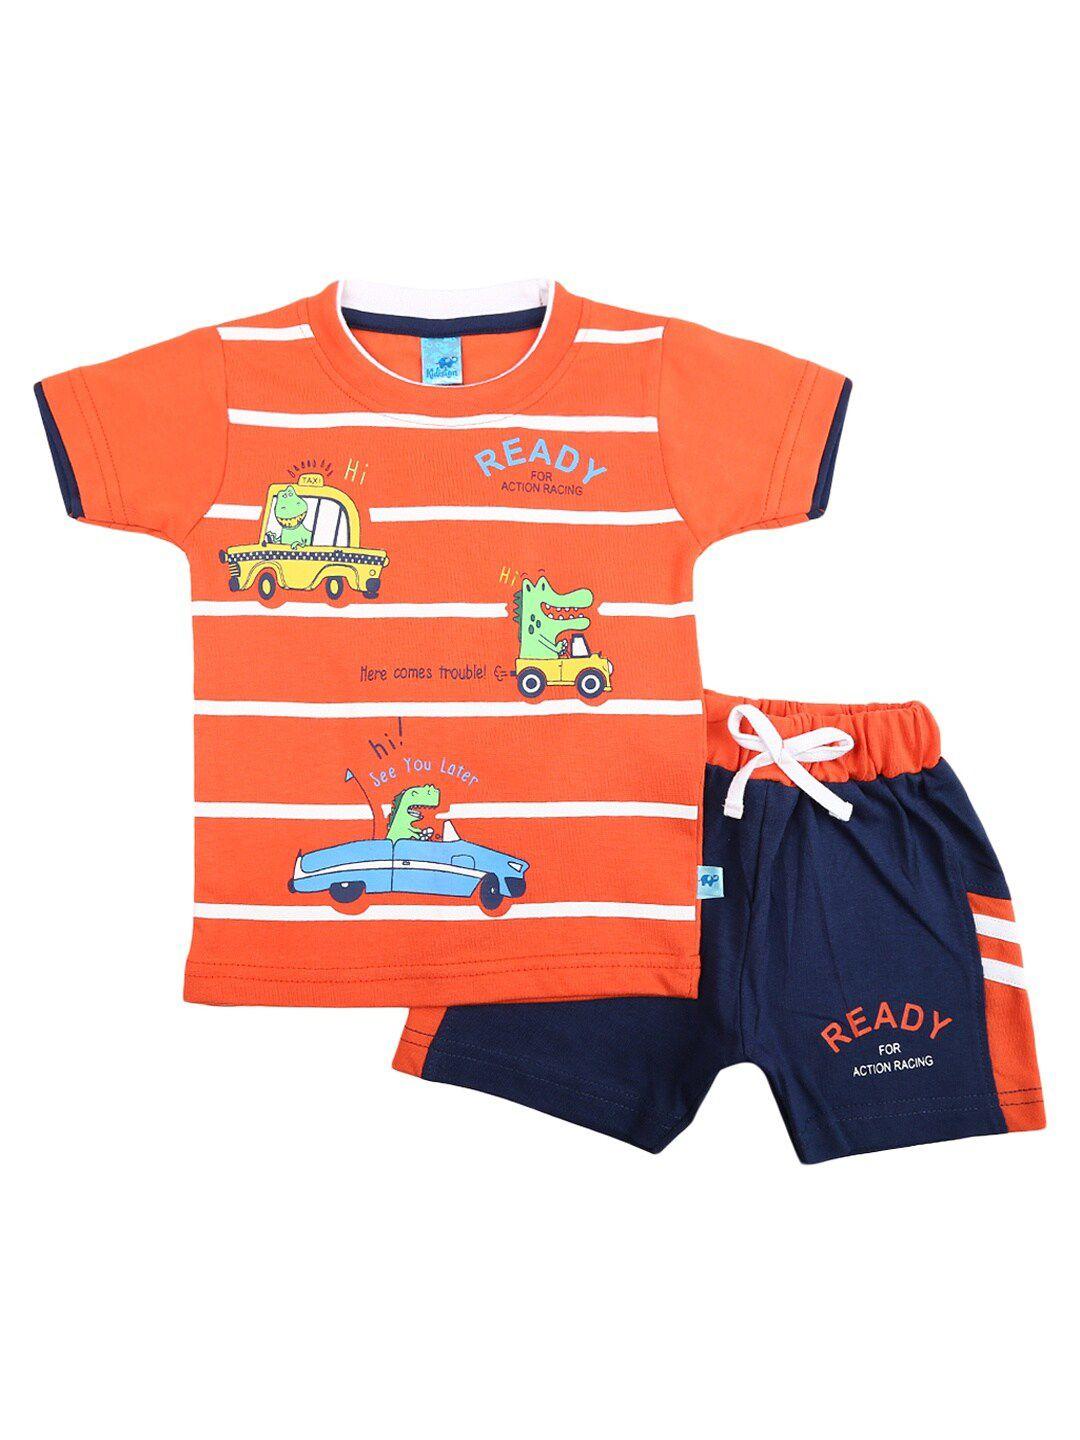 v-mart unisex kids orange & navy blue striped t-shirt and shirt with shorts